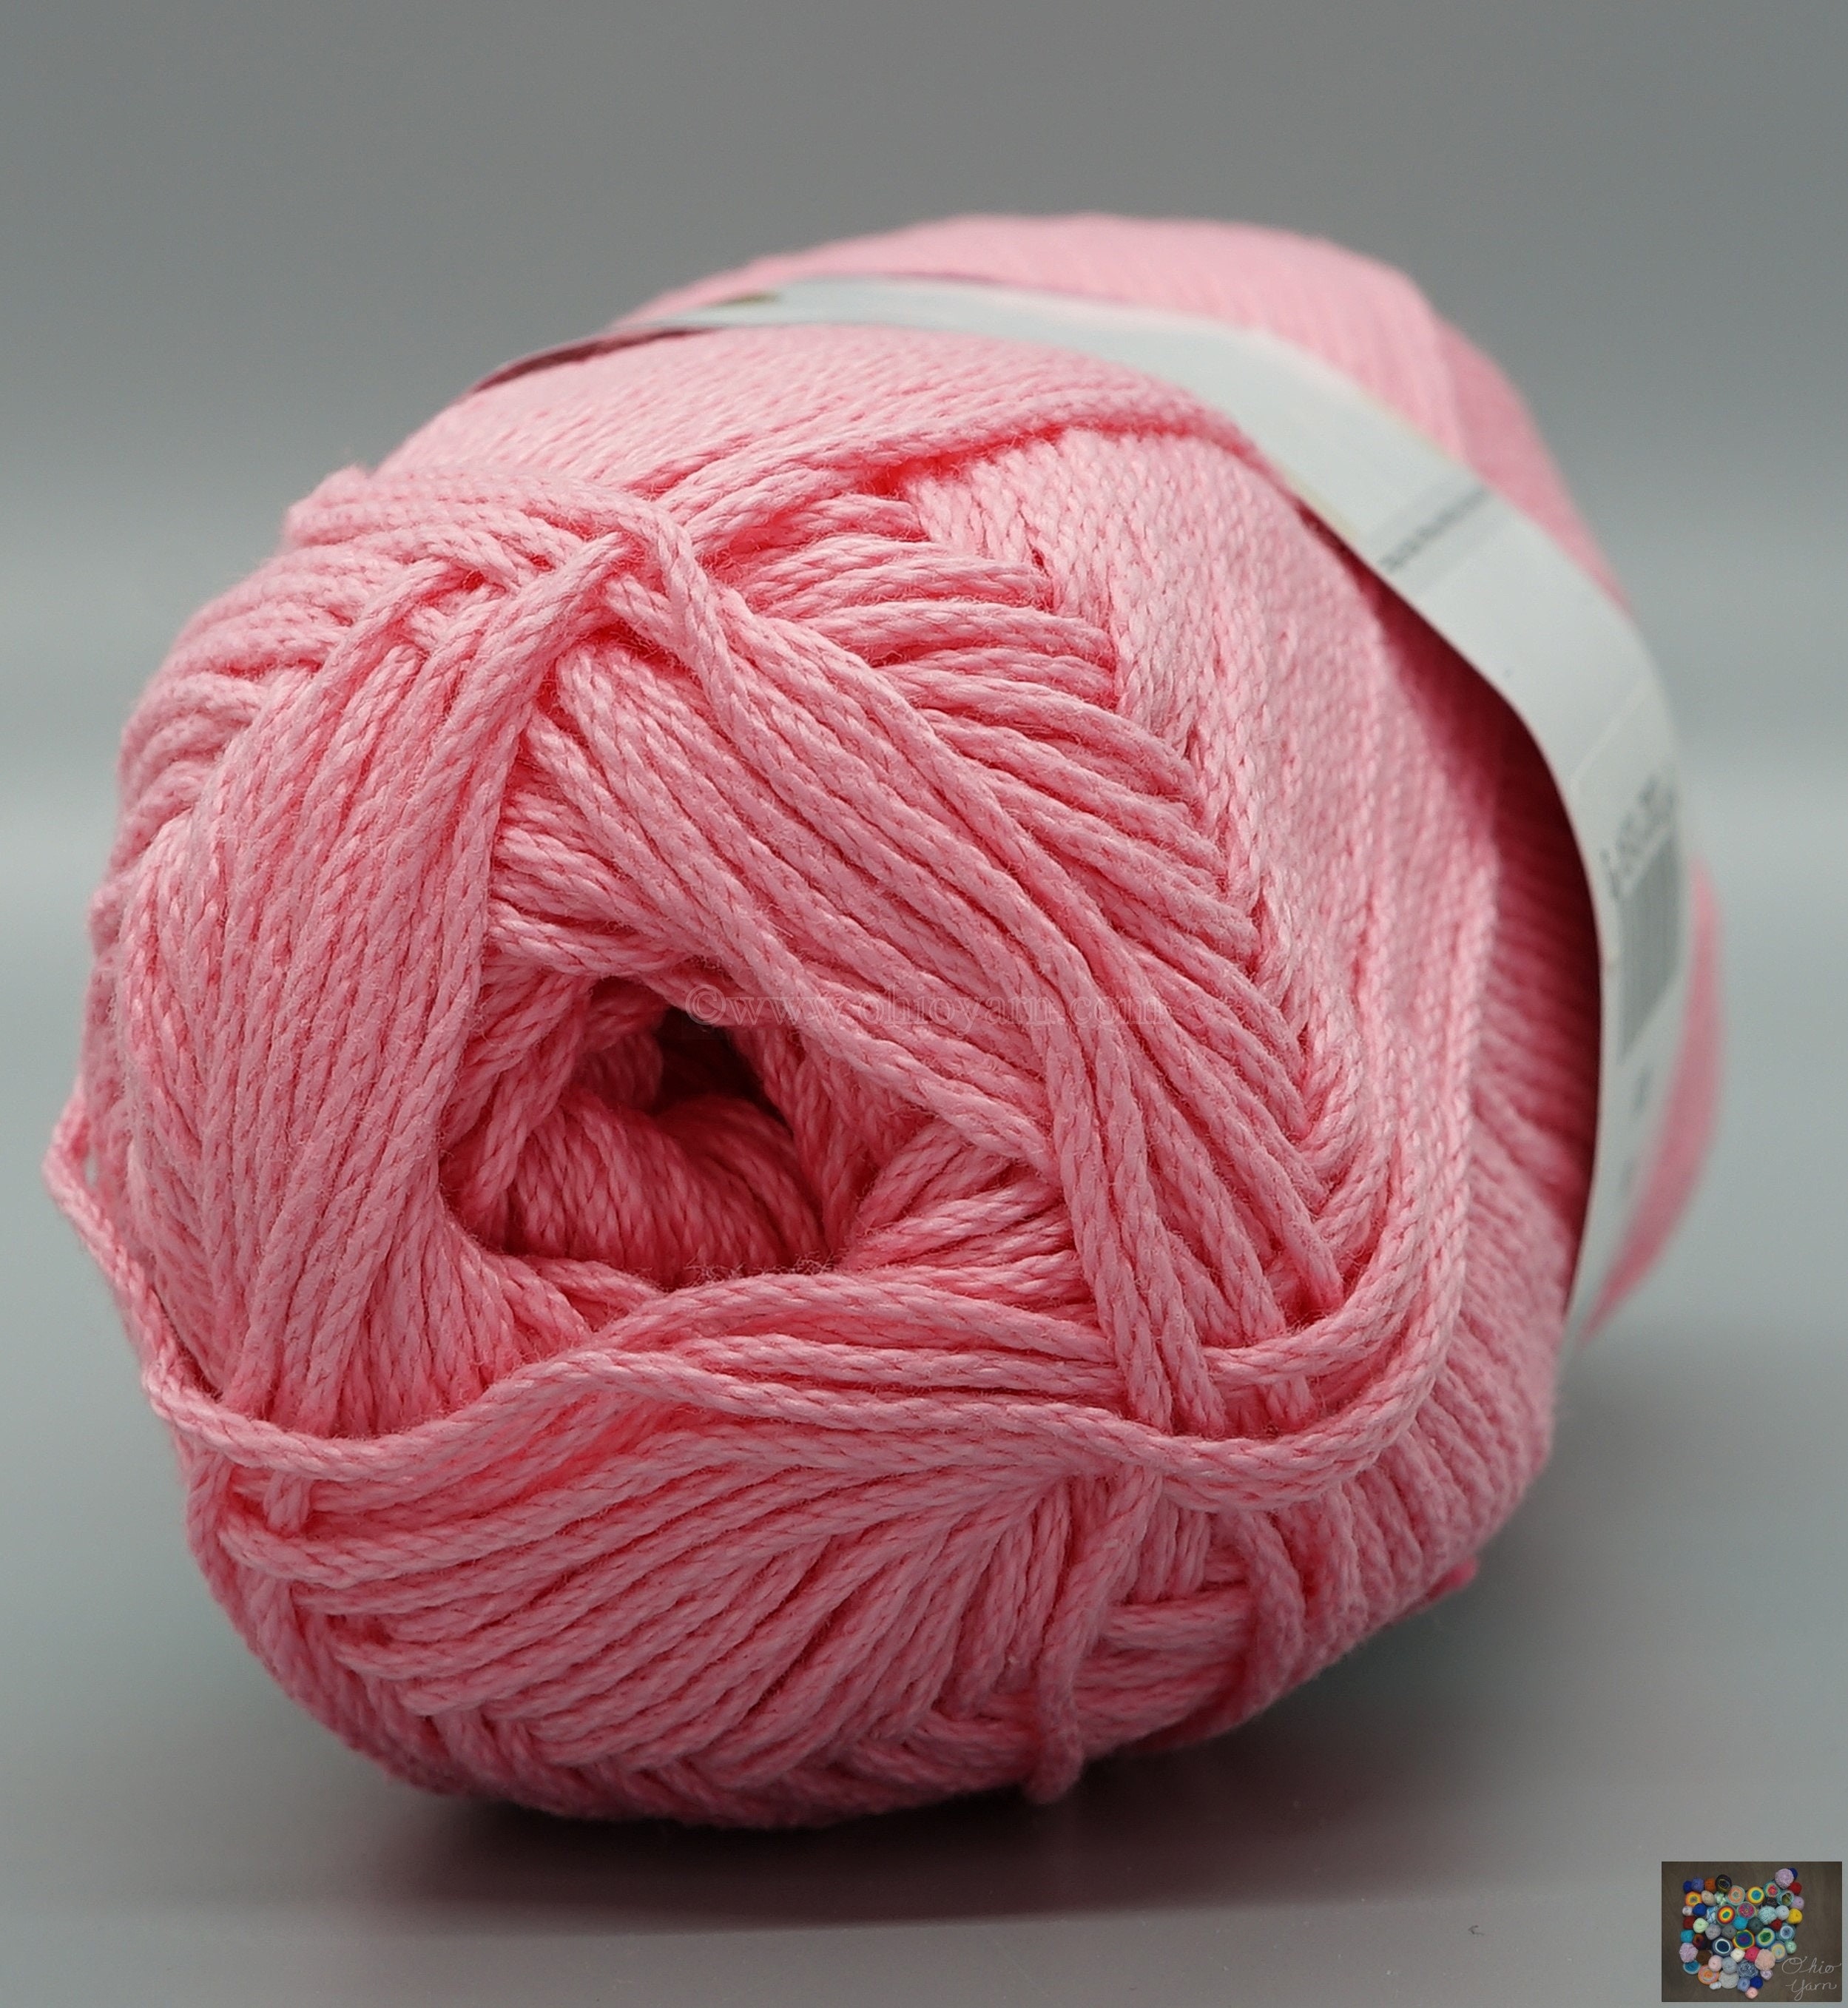 Lion Brand 24/7 Cotton 101 Pink Yarn 100% Mercerized Cotton -  Norway